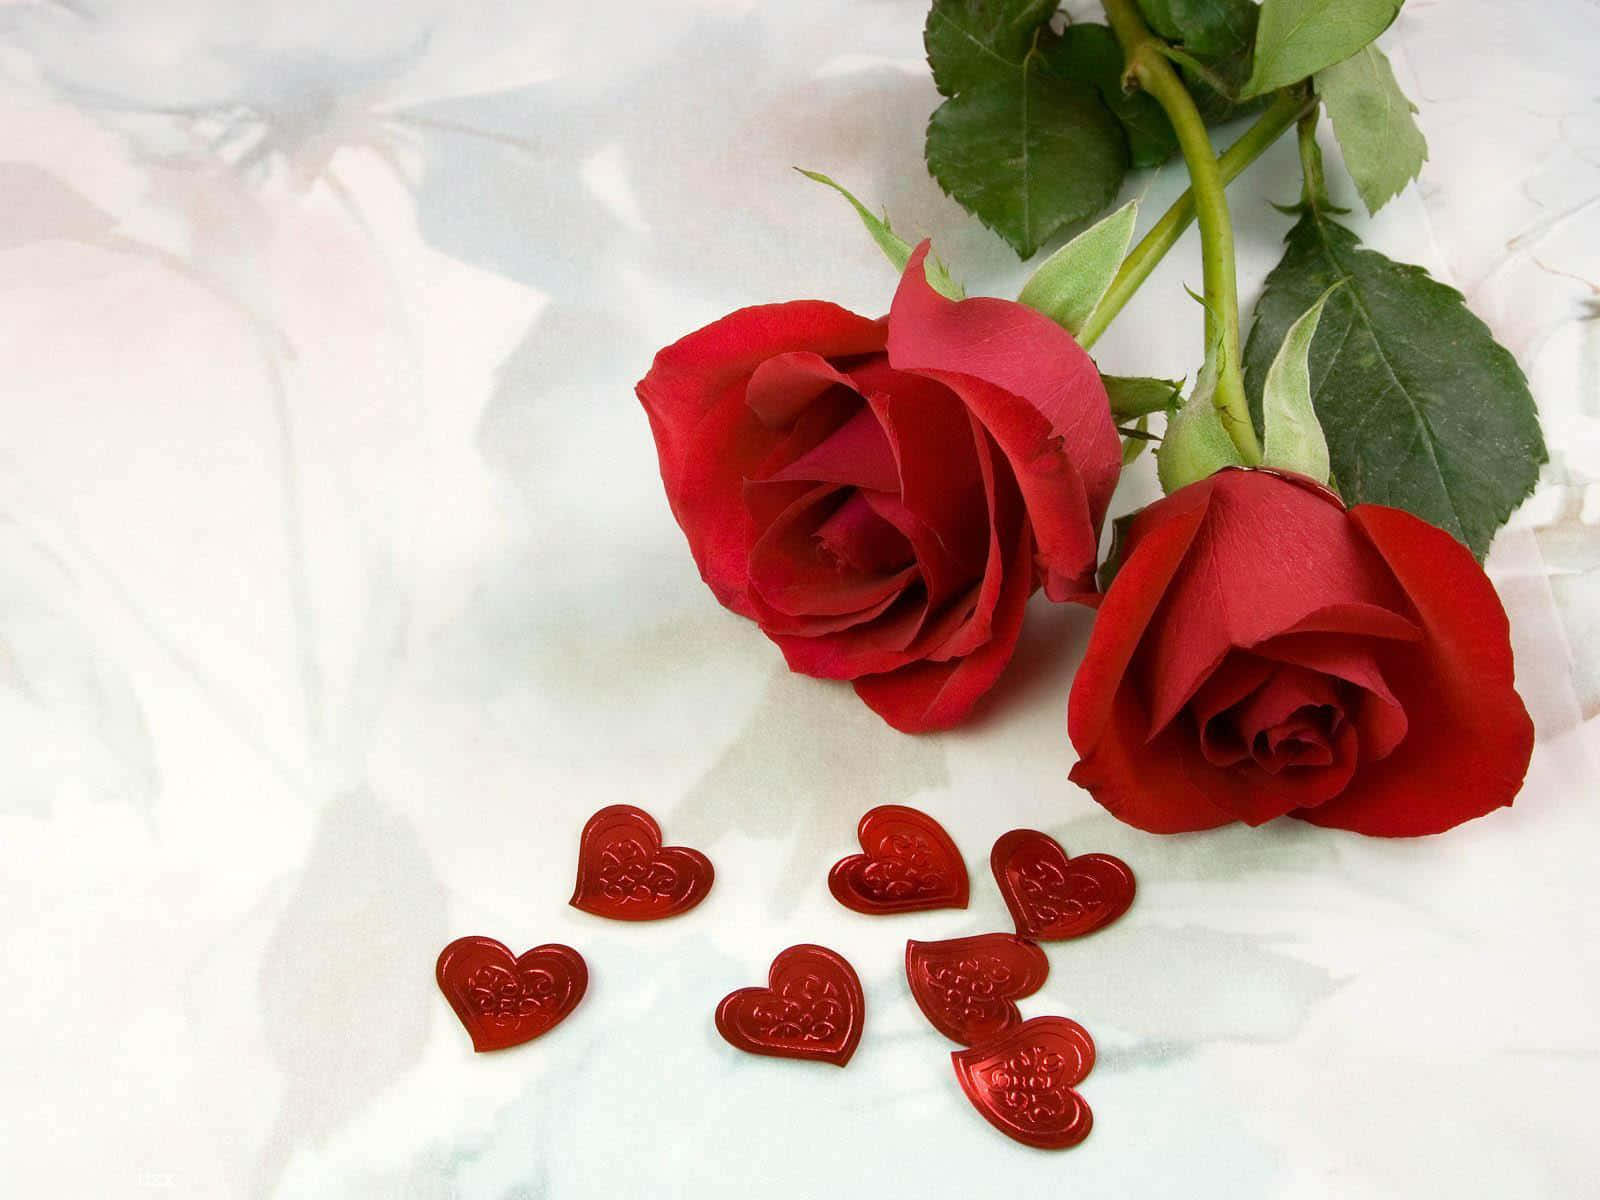 979 Hd Love Rose Flower Images, Stock Photos & Vectors | Shutterstock